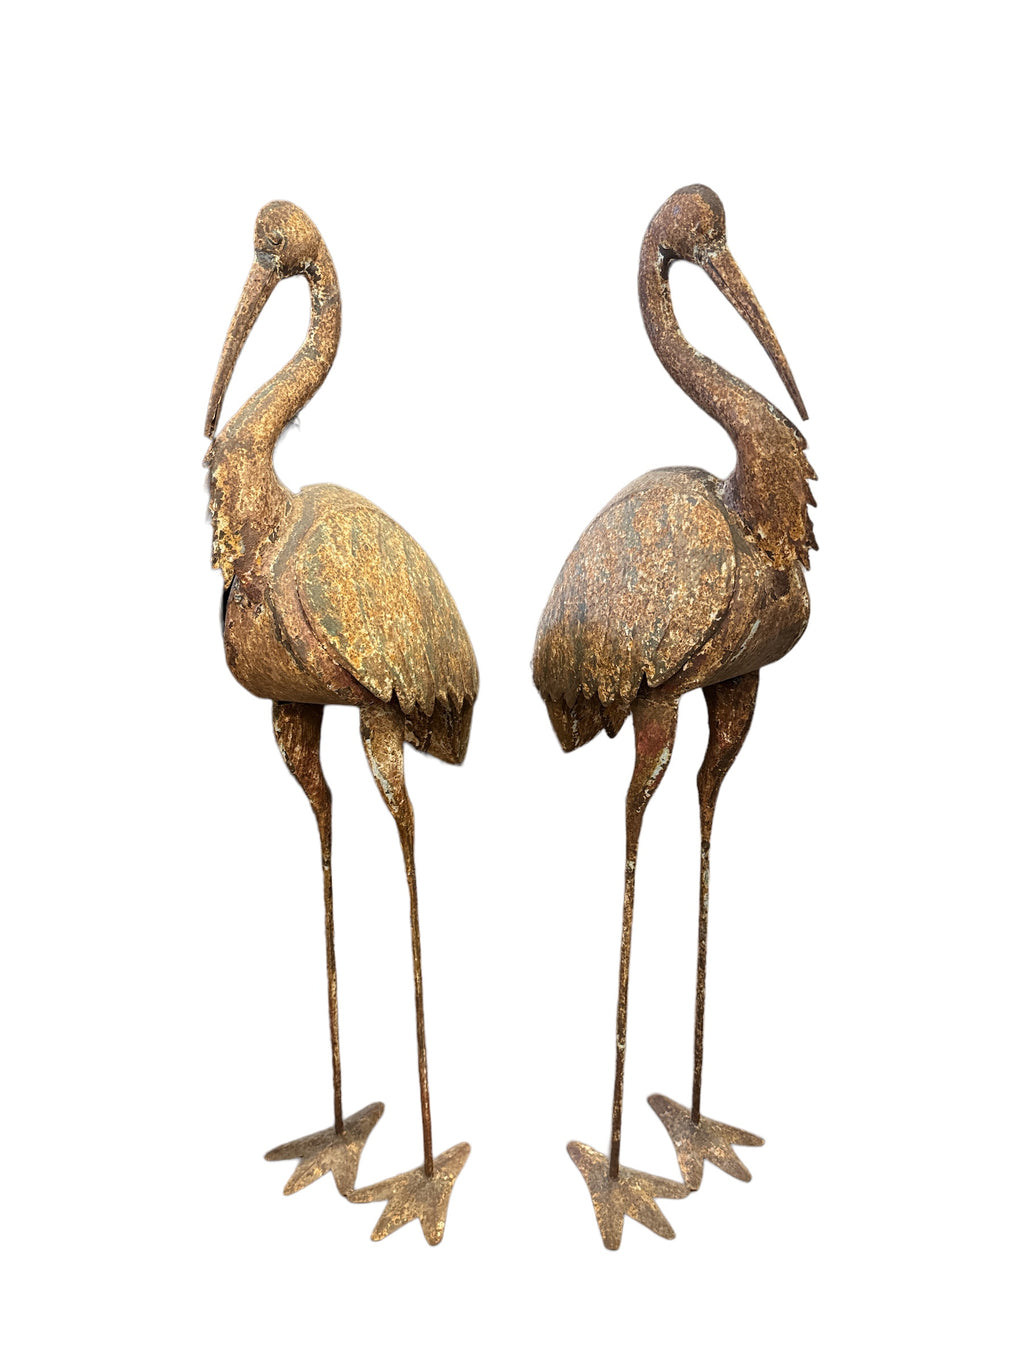 Pair French Vintage Flamingos